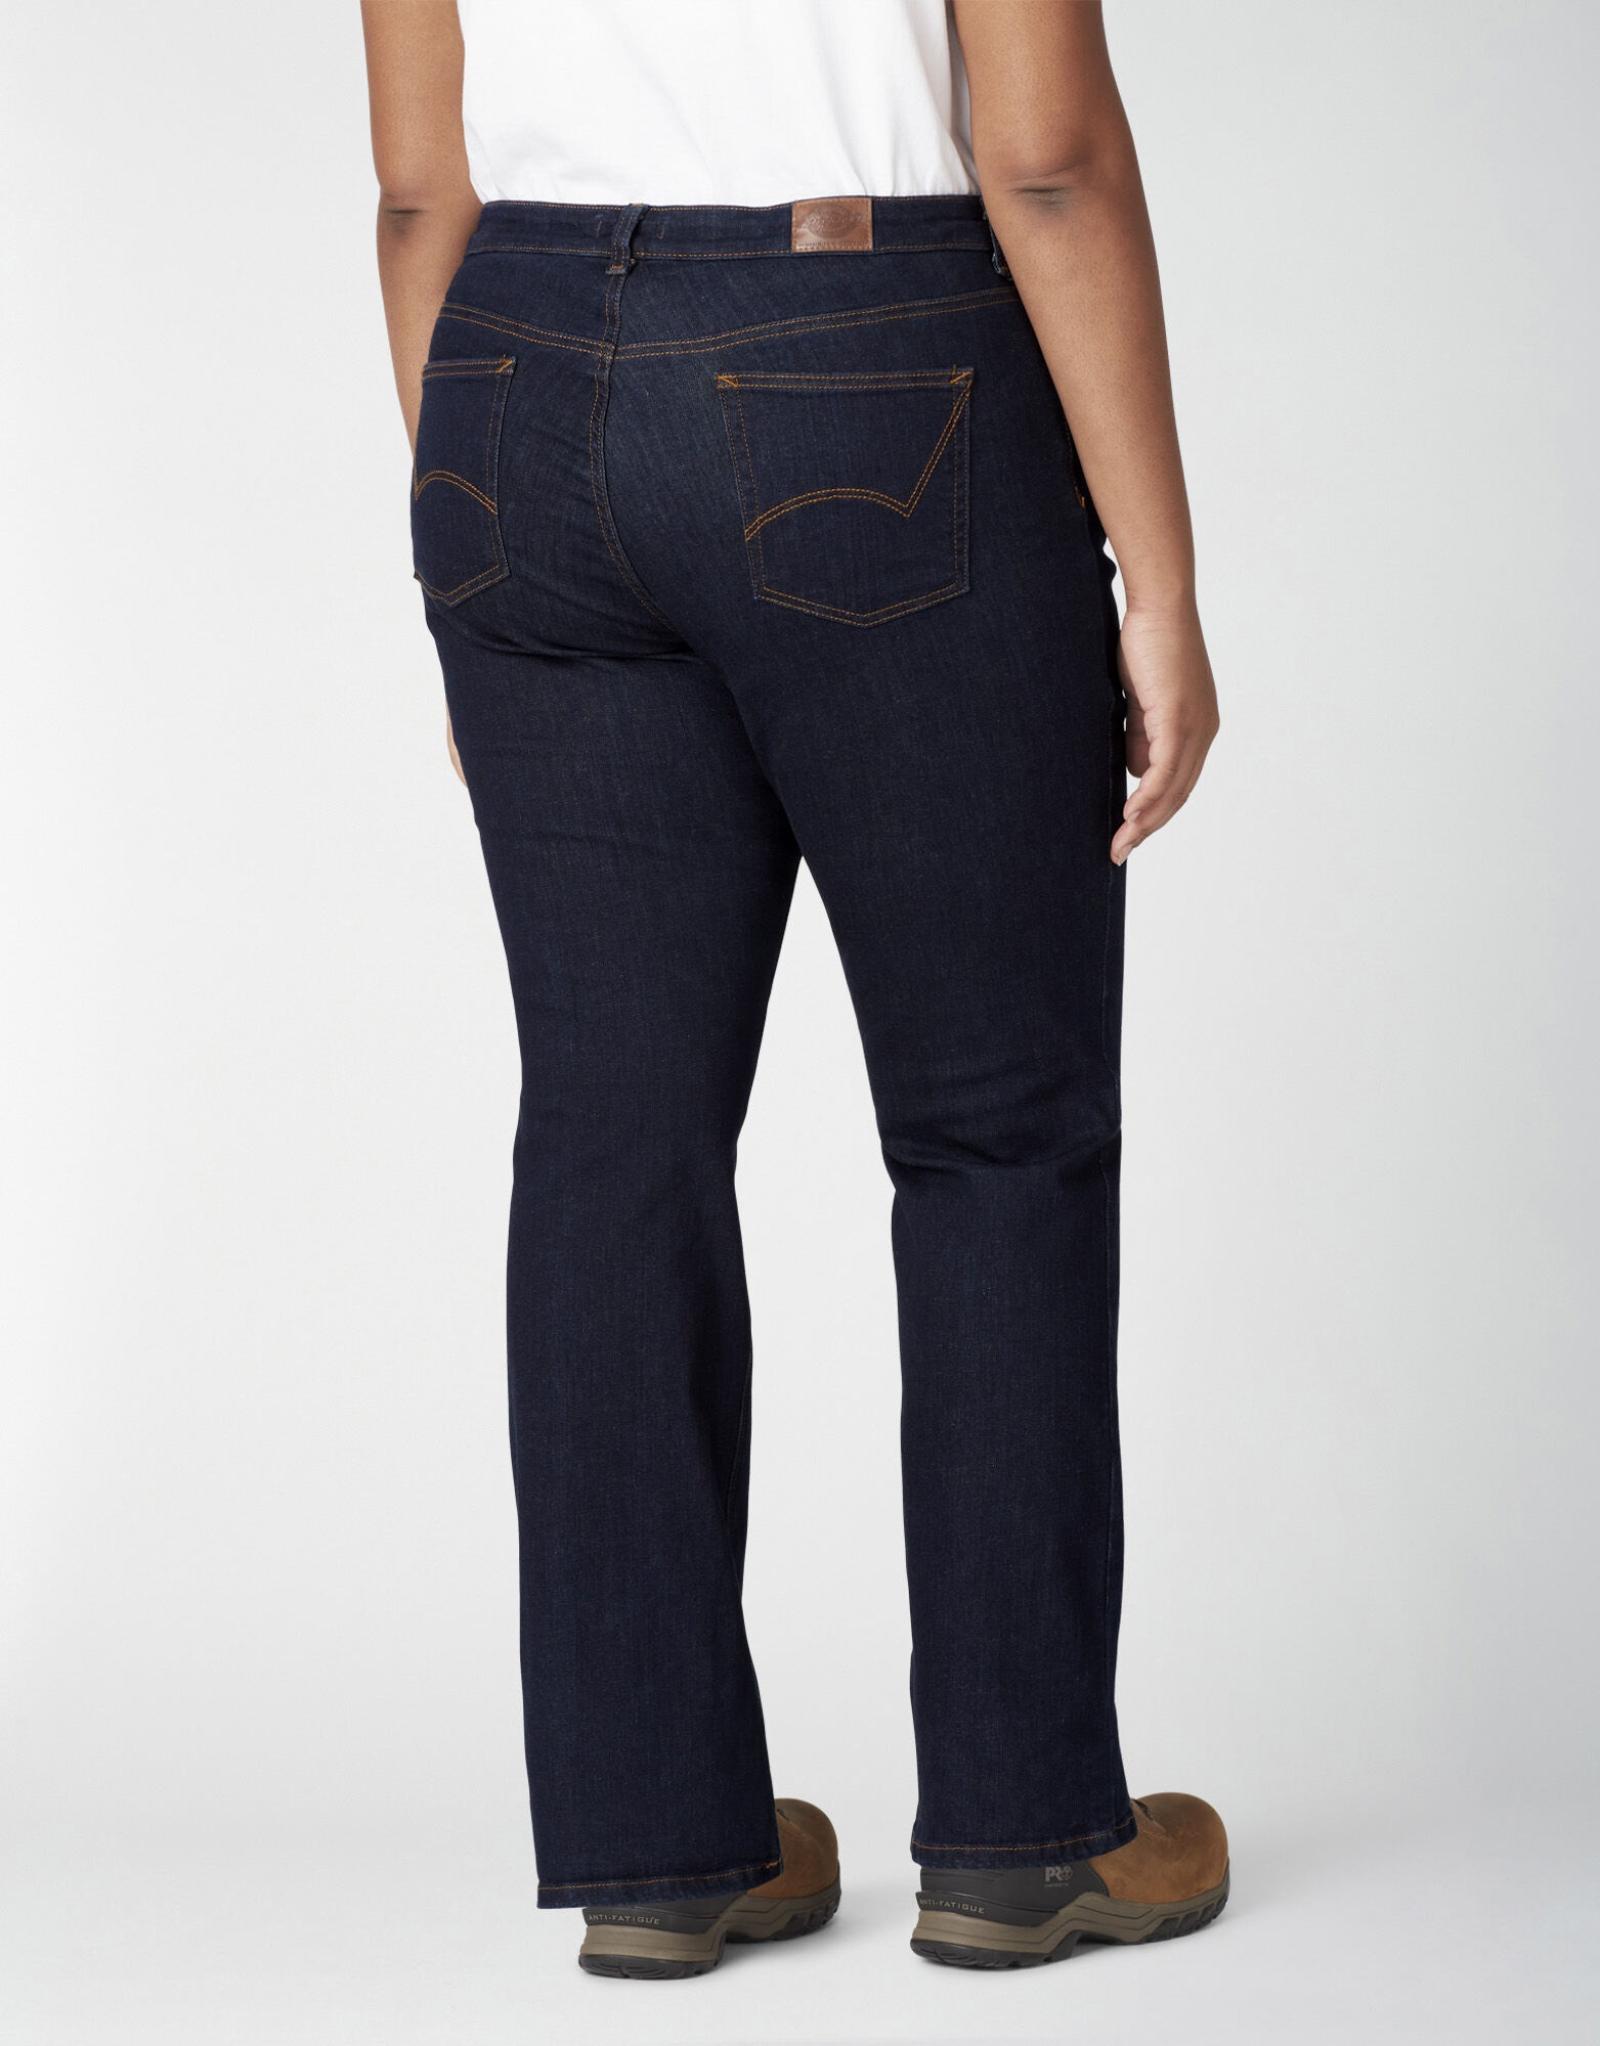 Dickies Women's Plus Size Perfect Shape Bootcut Stretch Denim Jeans